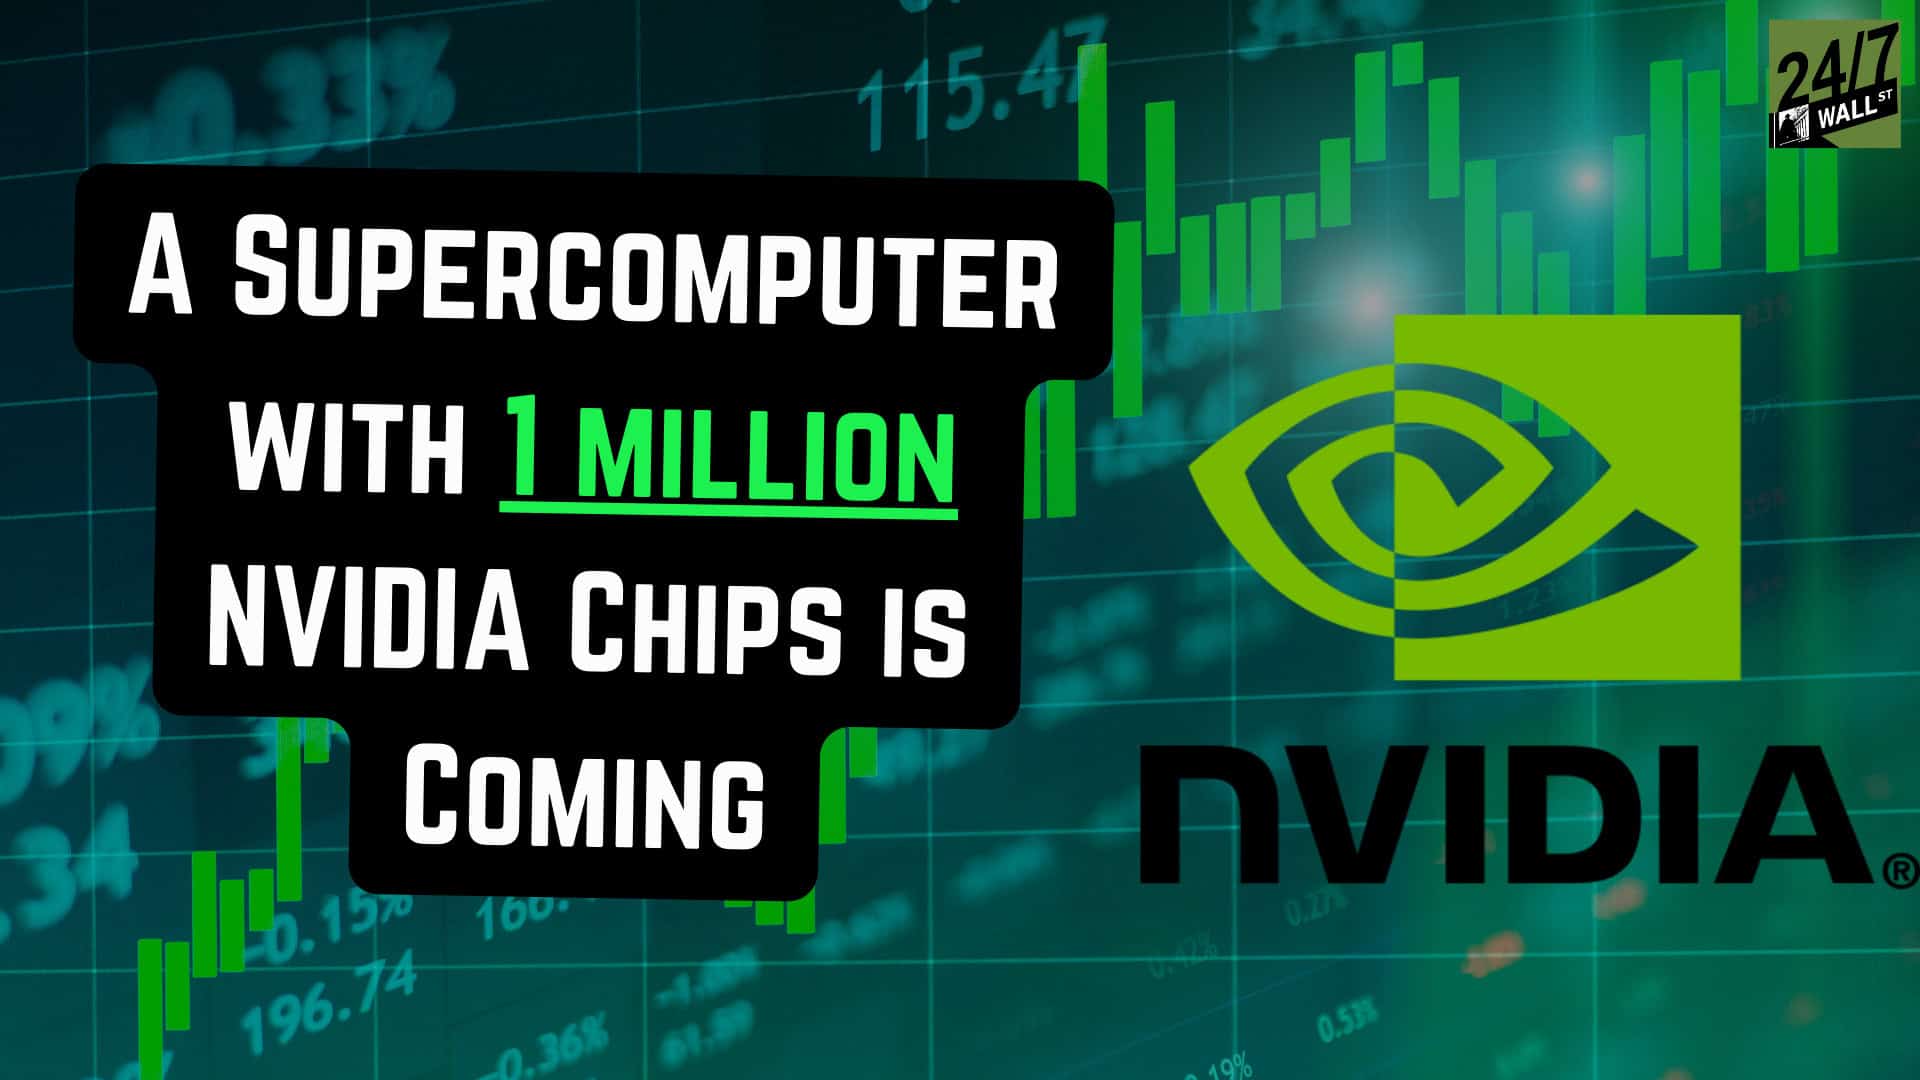 NVIDIA Supercomputer is Coming